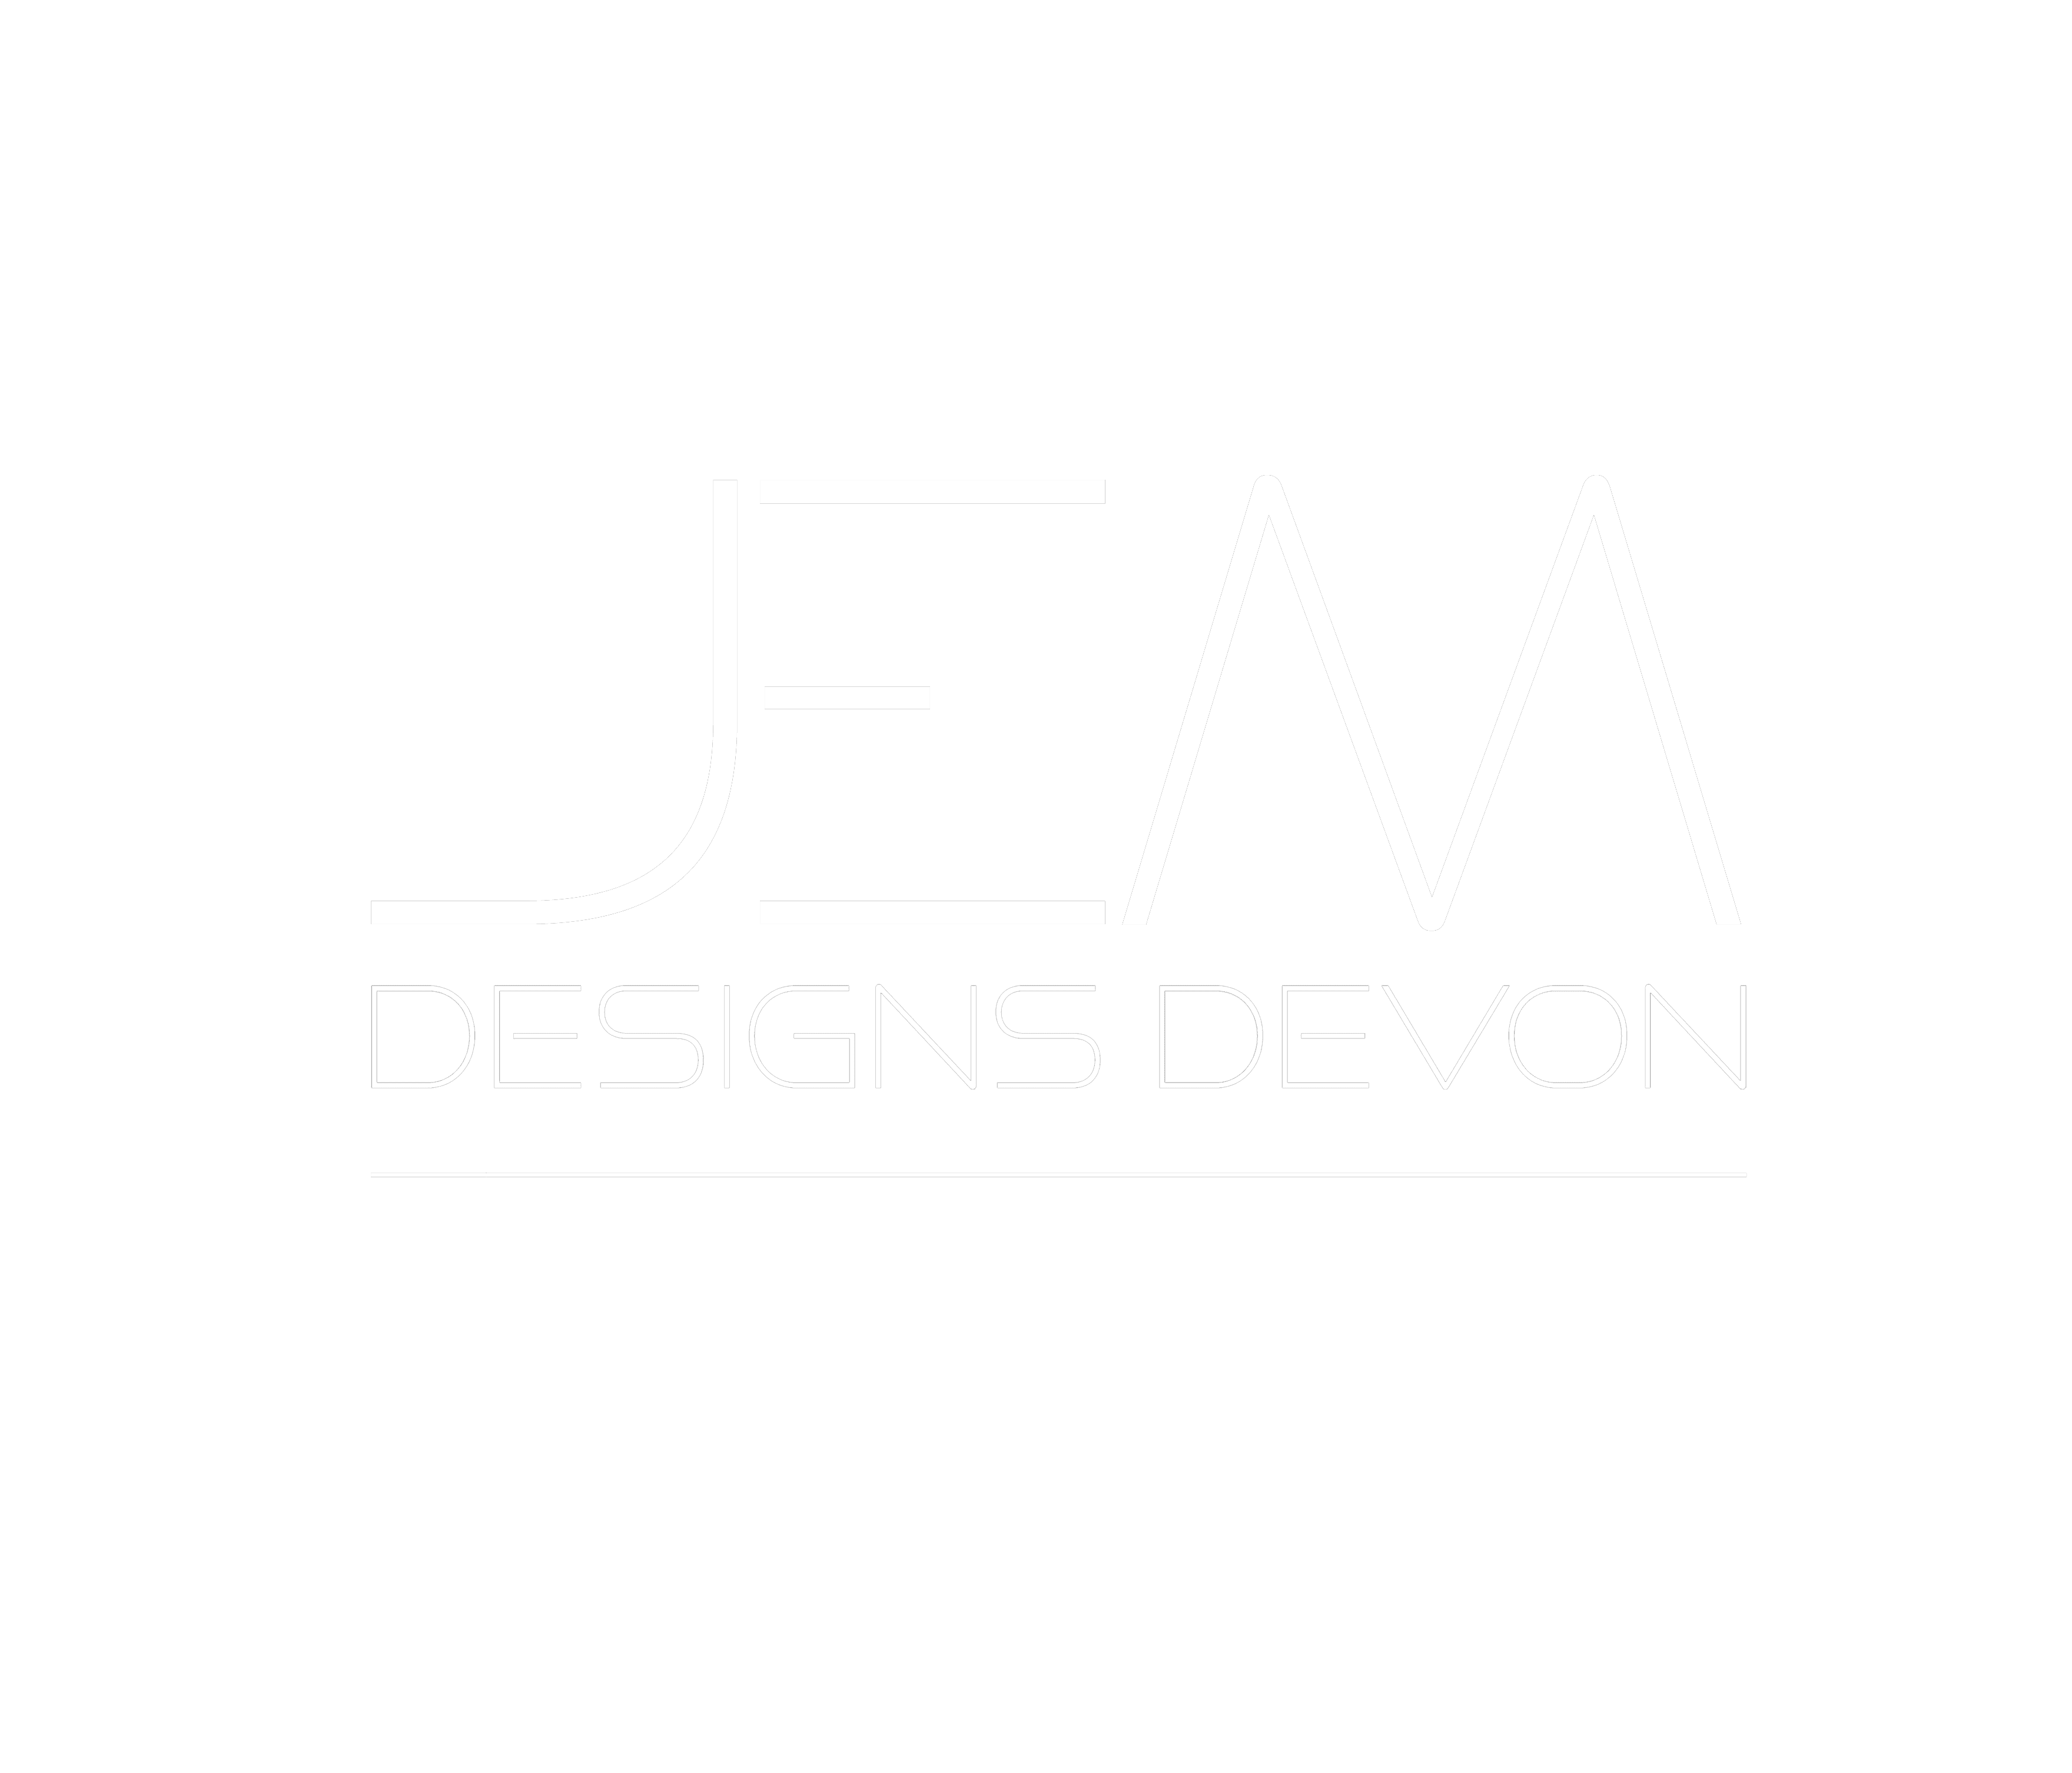 Jem Designs Devon